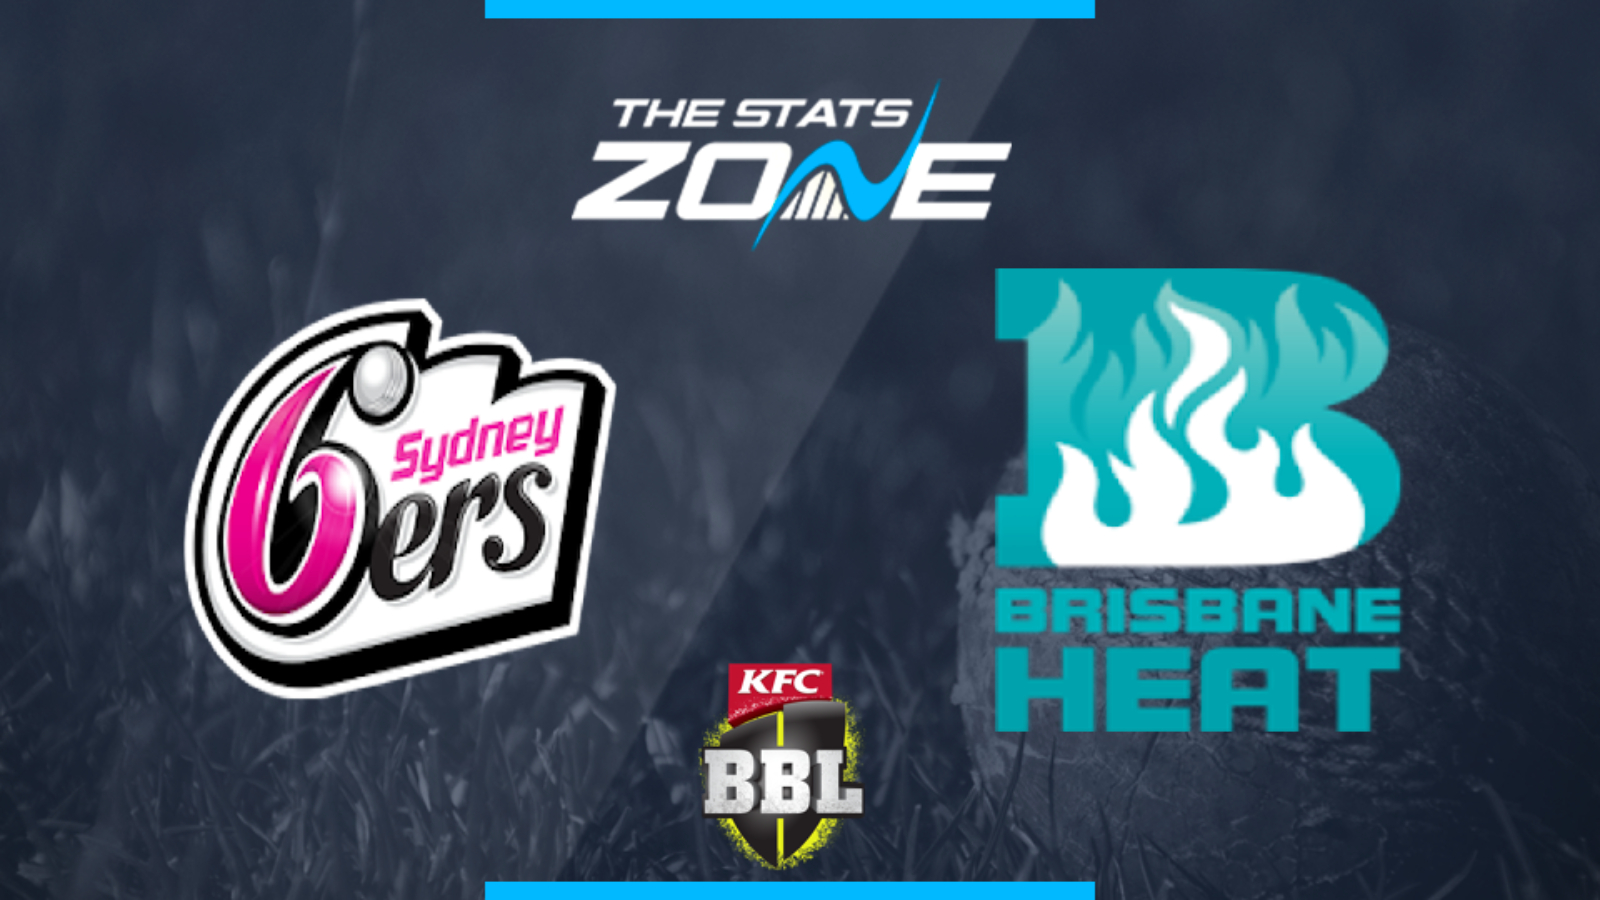 2019 20 Big Bash League Sydney Sixers Vs Brisbane Heat Preview Prediction The Stats Zone